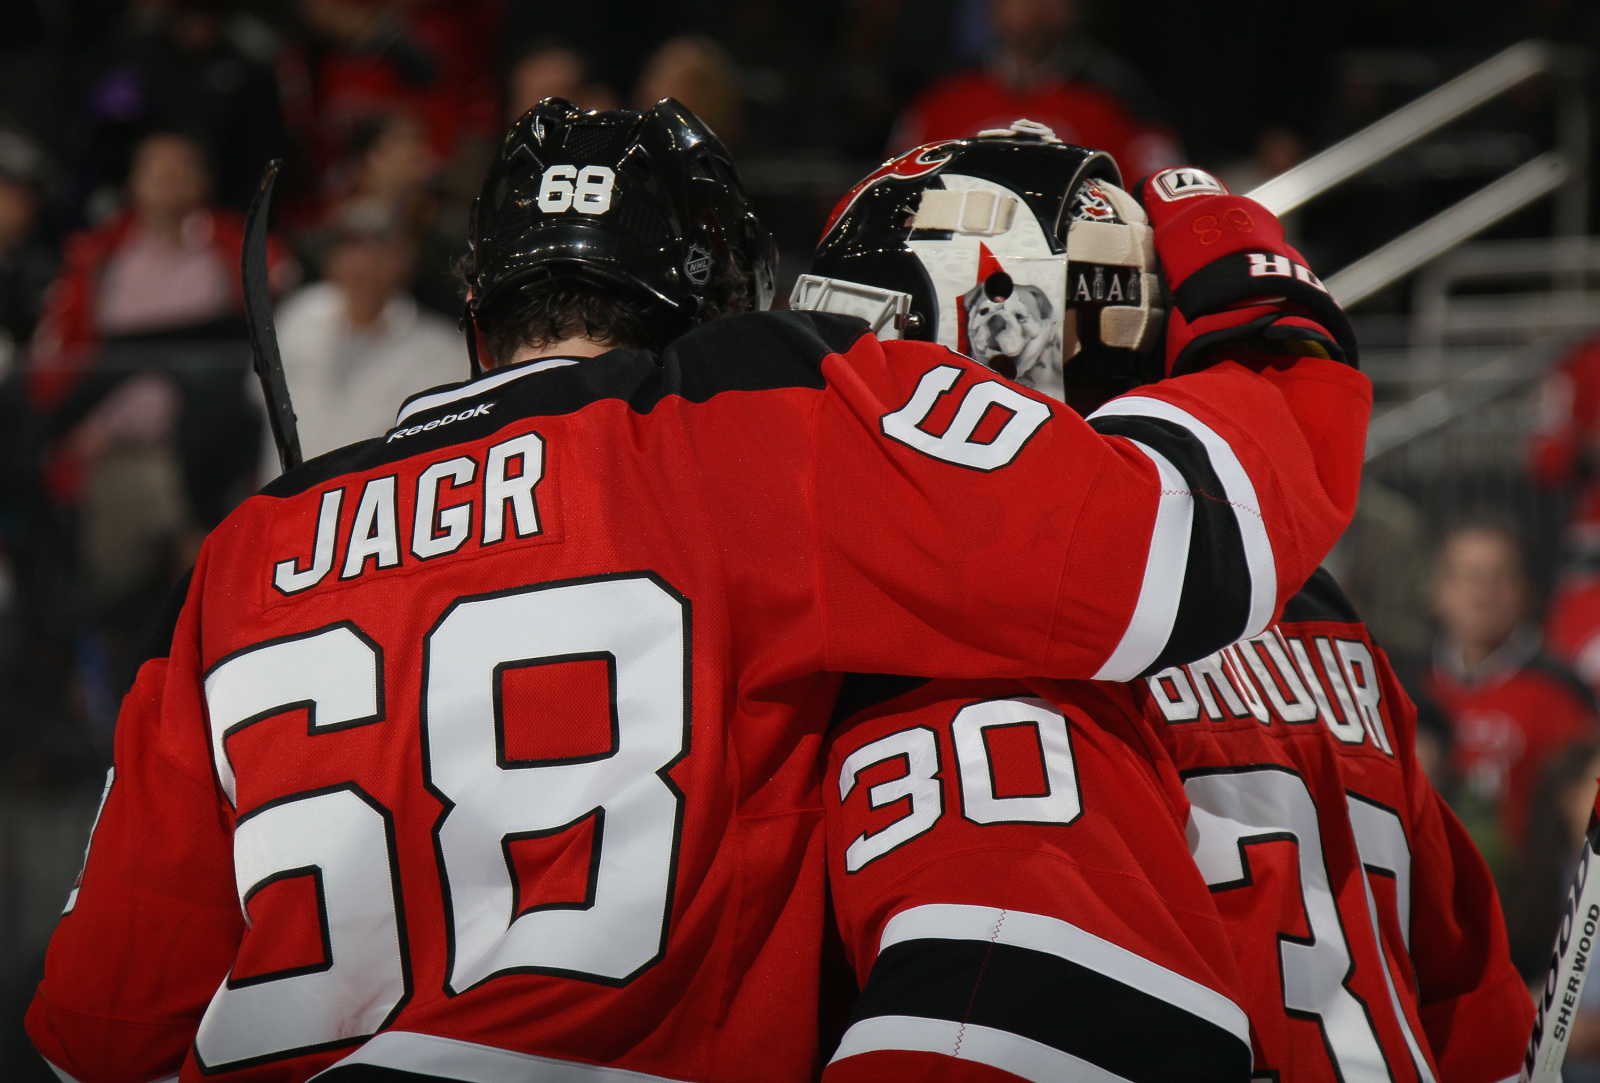 File:Jaromir Jagr - New Jersey Devils.jpg - Wikipedia